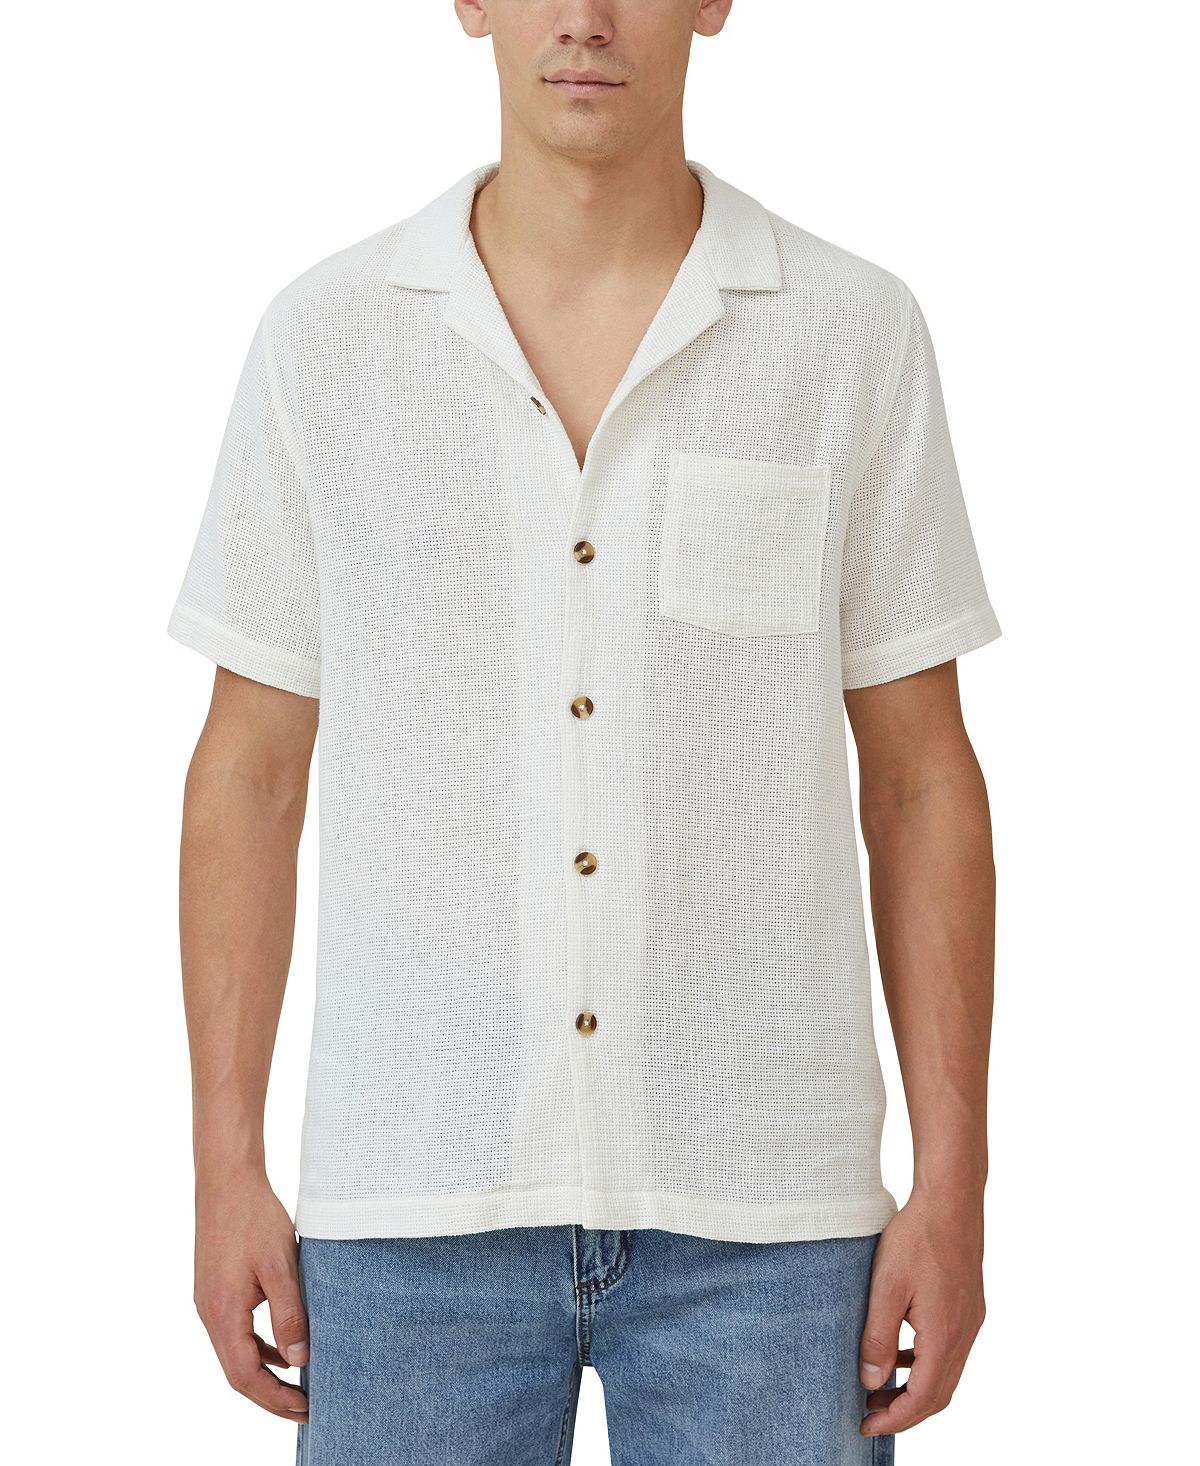 Мужская рубашка Palma с коротким рукавом COTTON ON цена и фото